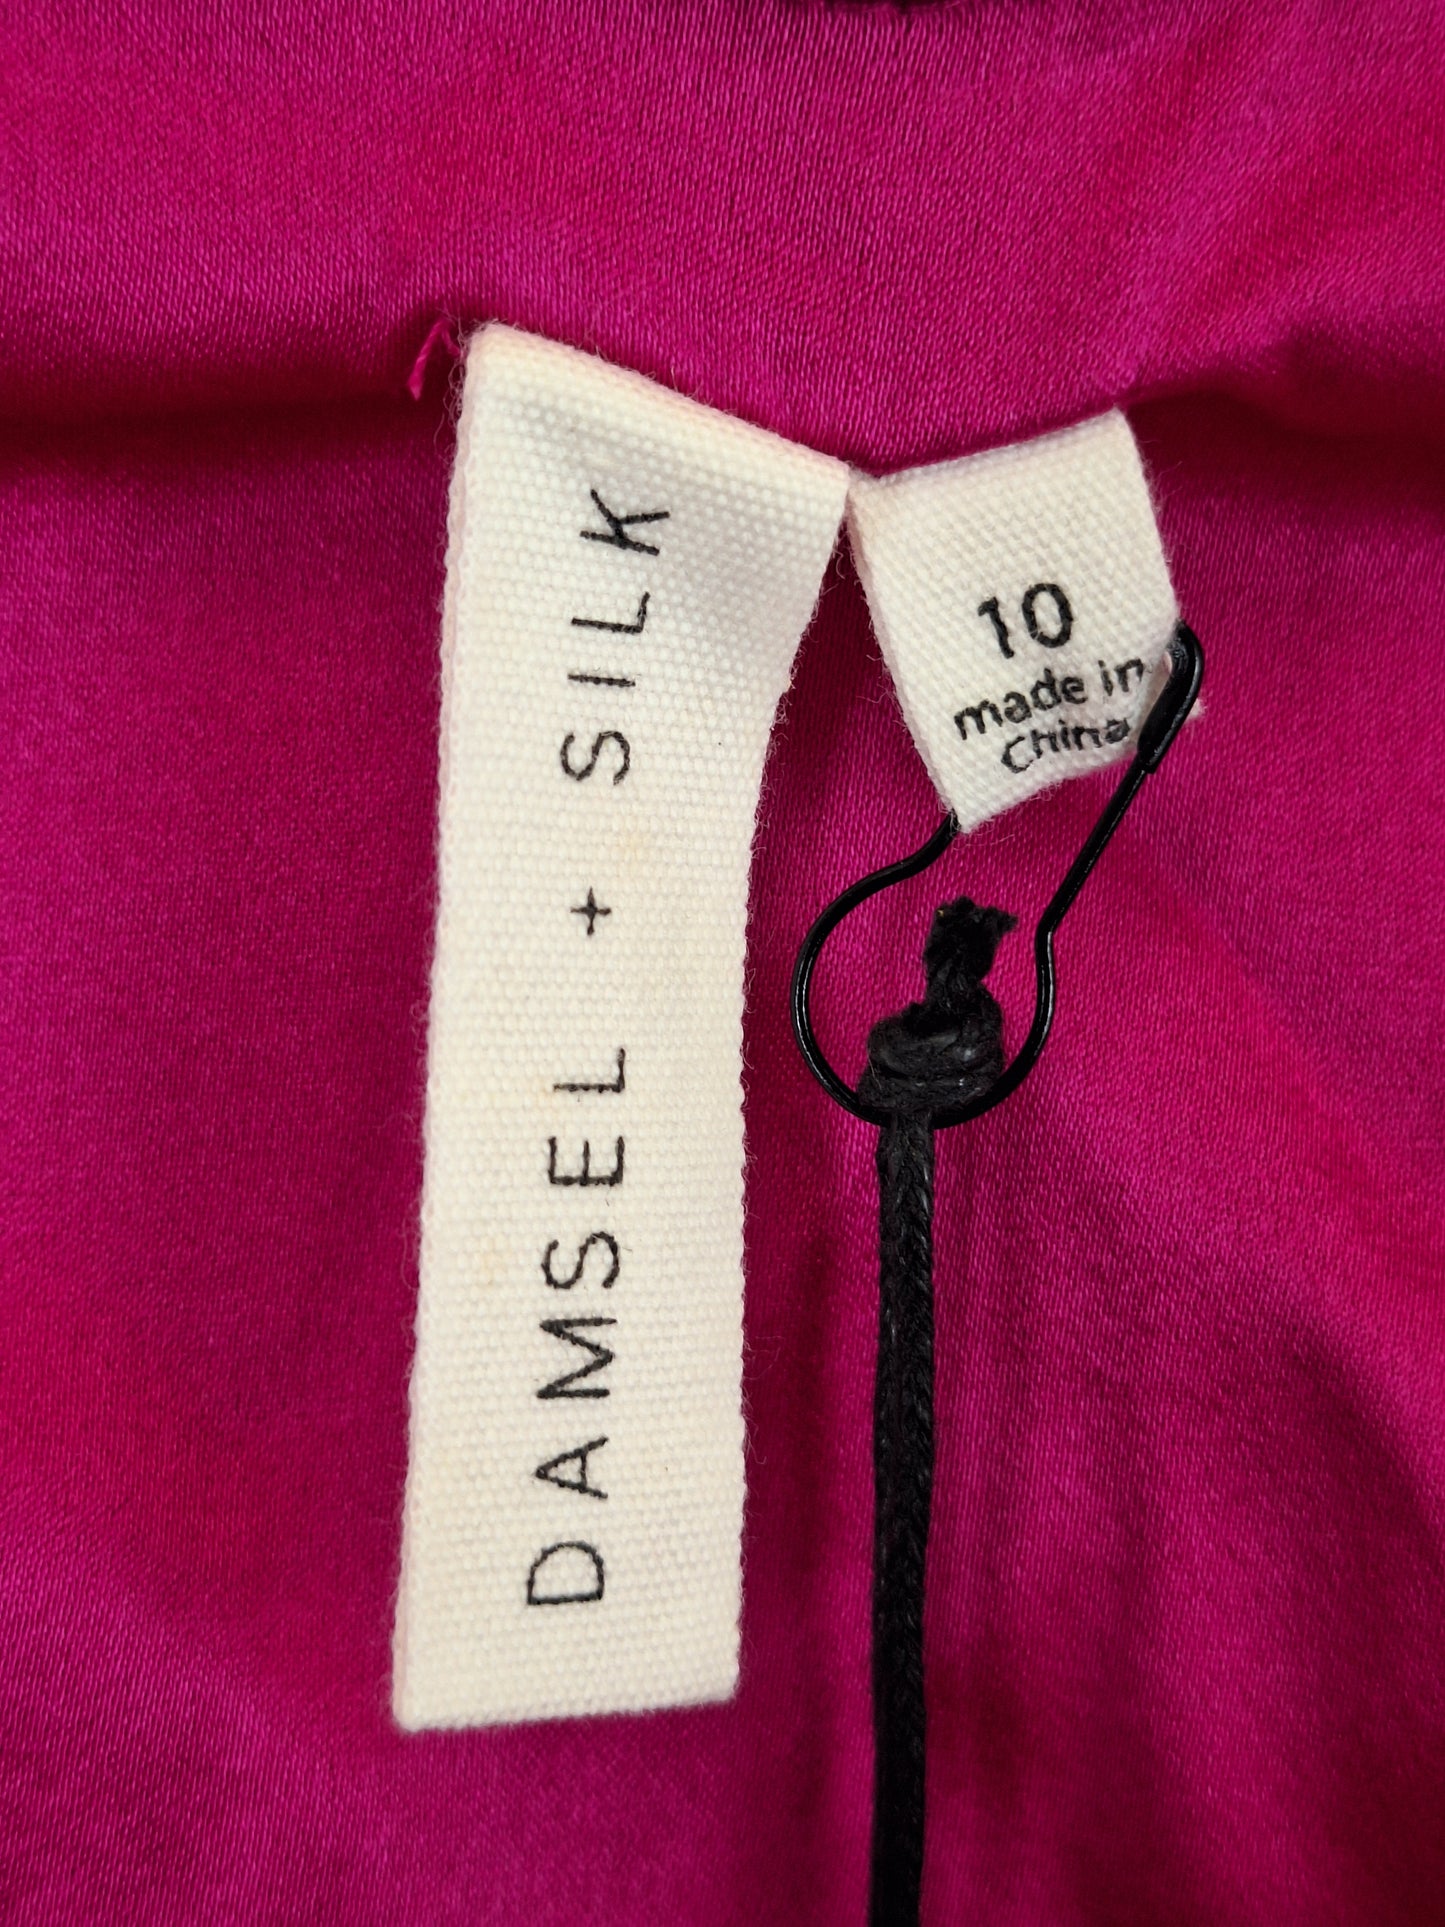 Damsel + Silk  Fuchsia Core Slip Top Size 10 by SwapUp-Online Second Hand Store-Online Thrift Store